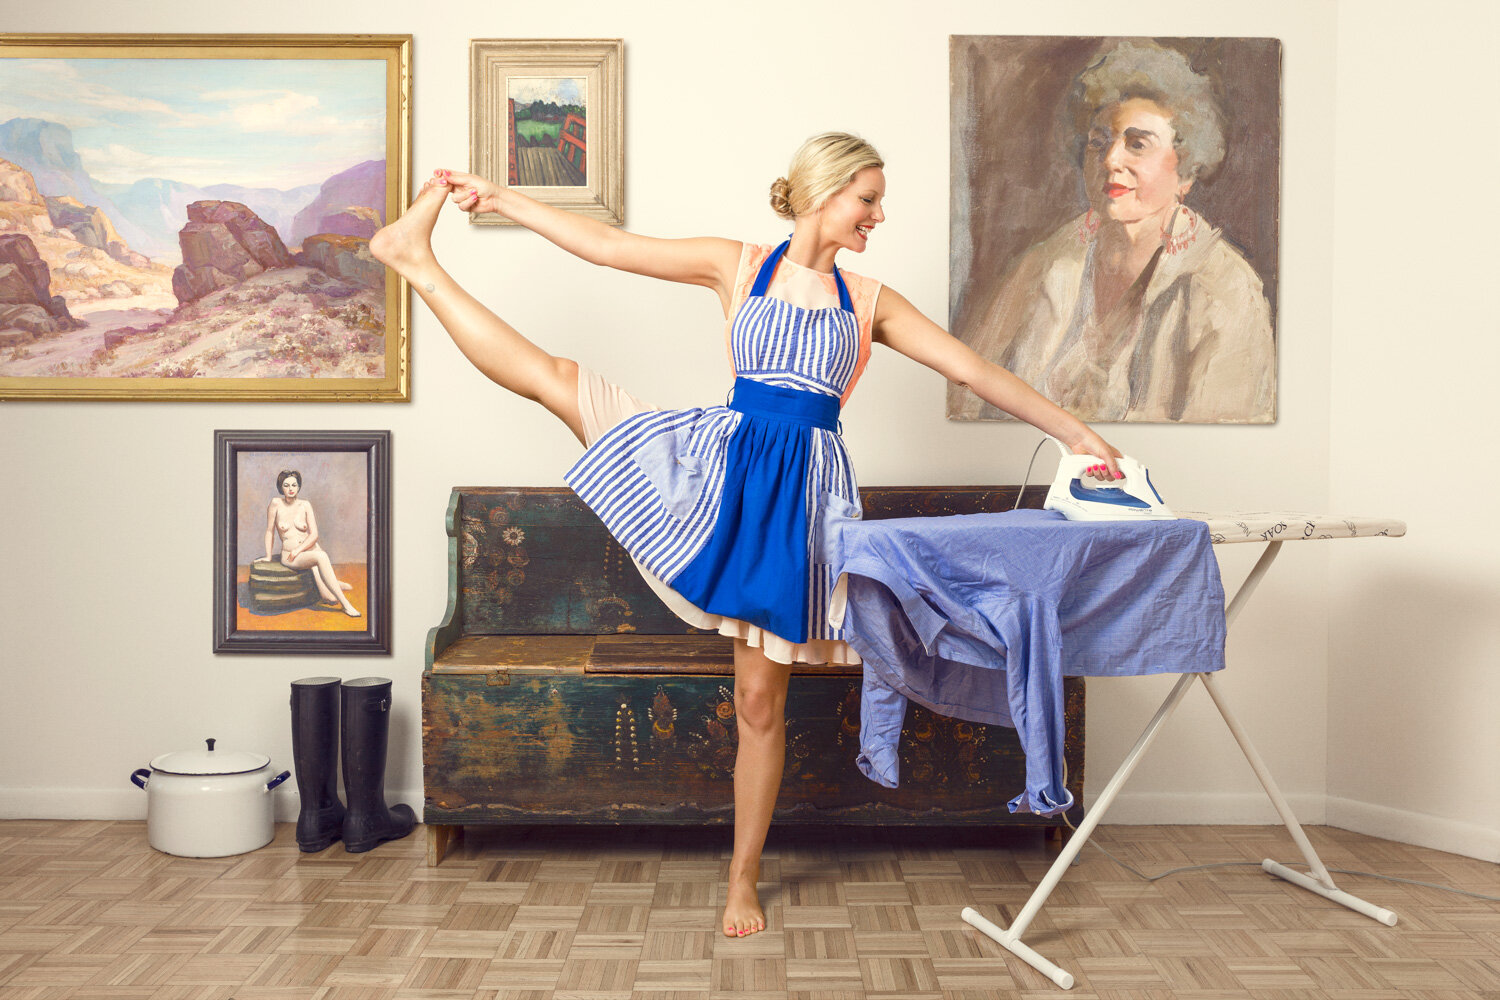 creative portrait of yogi Leila Johnson ironing a shirt while standing in a yoga pose by conceptual portrait photographer Hanna Agar